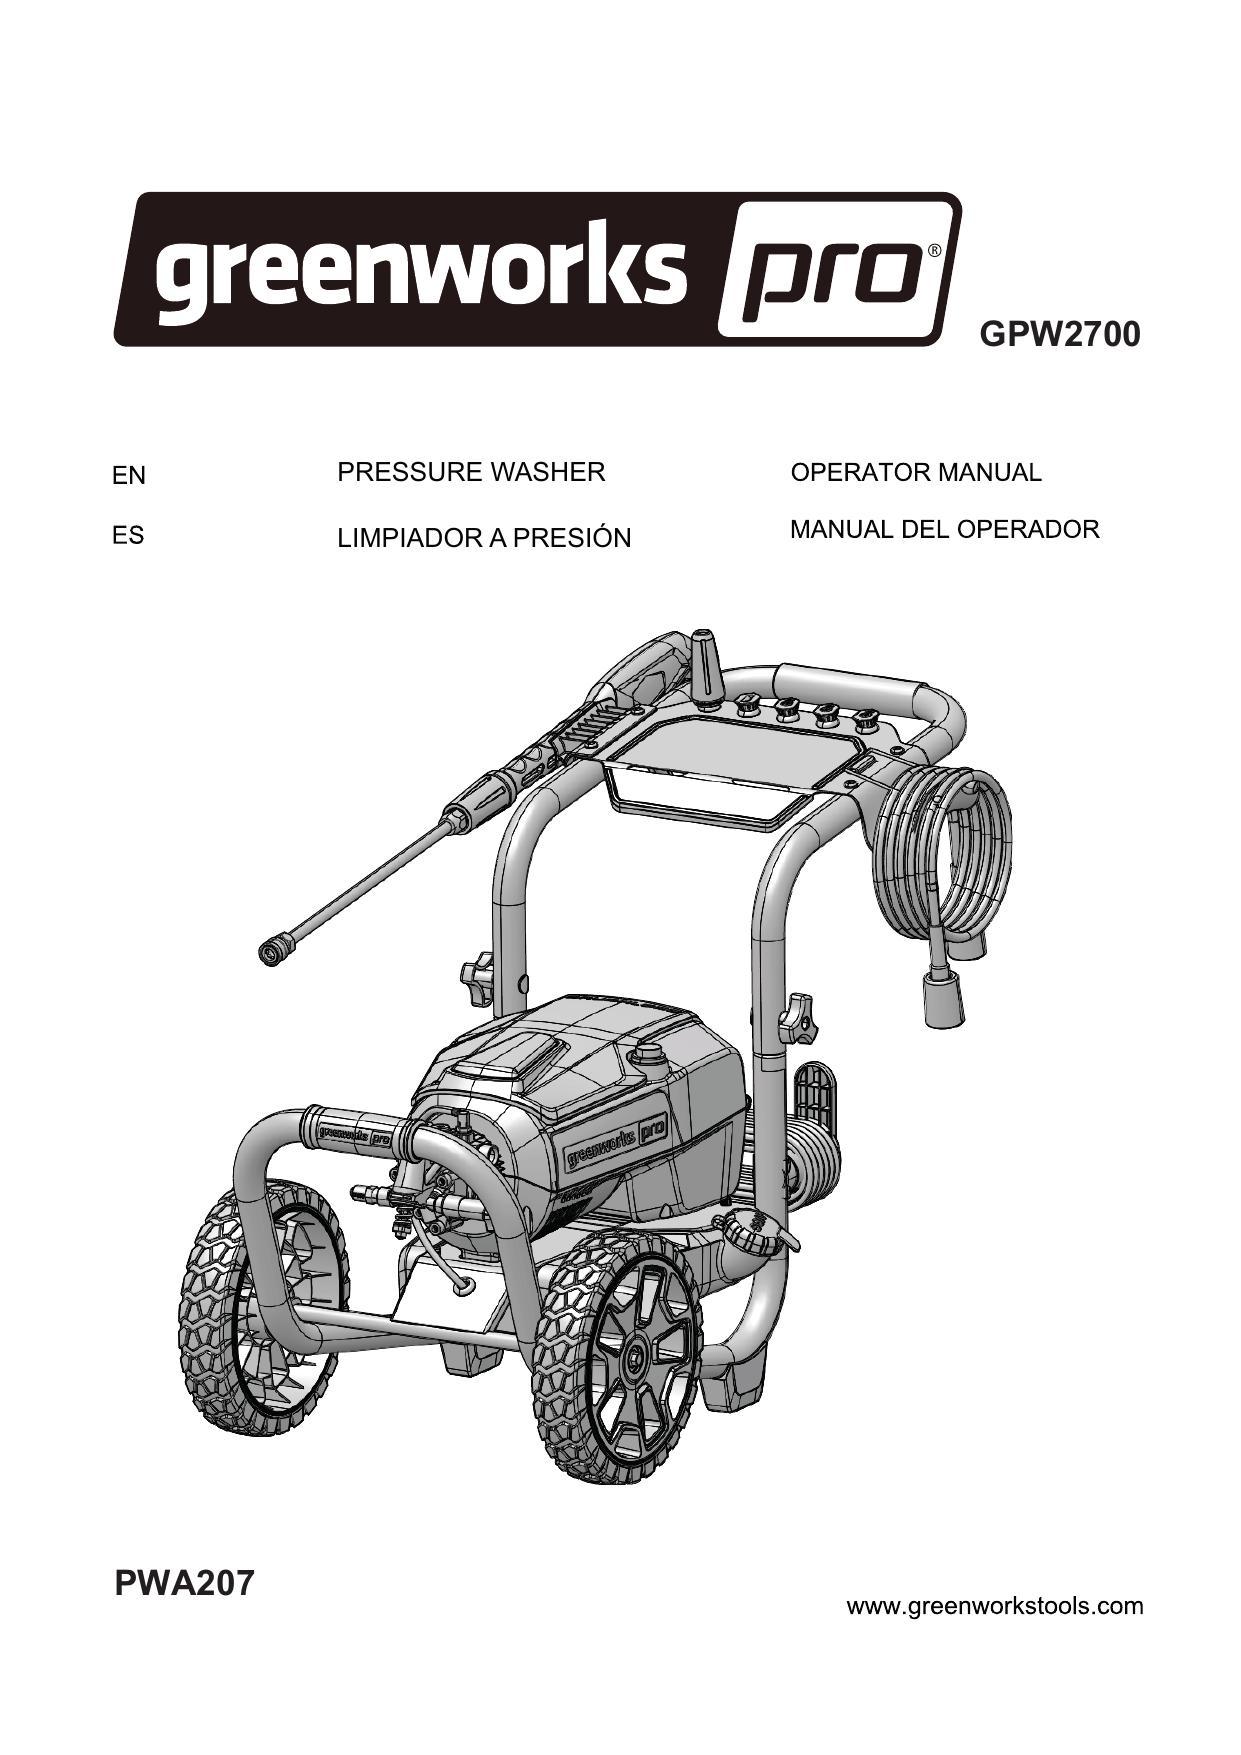 greenworks-pro-gpw2700-pressure-washer-operator-manual.pdf